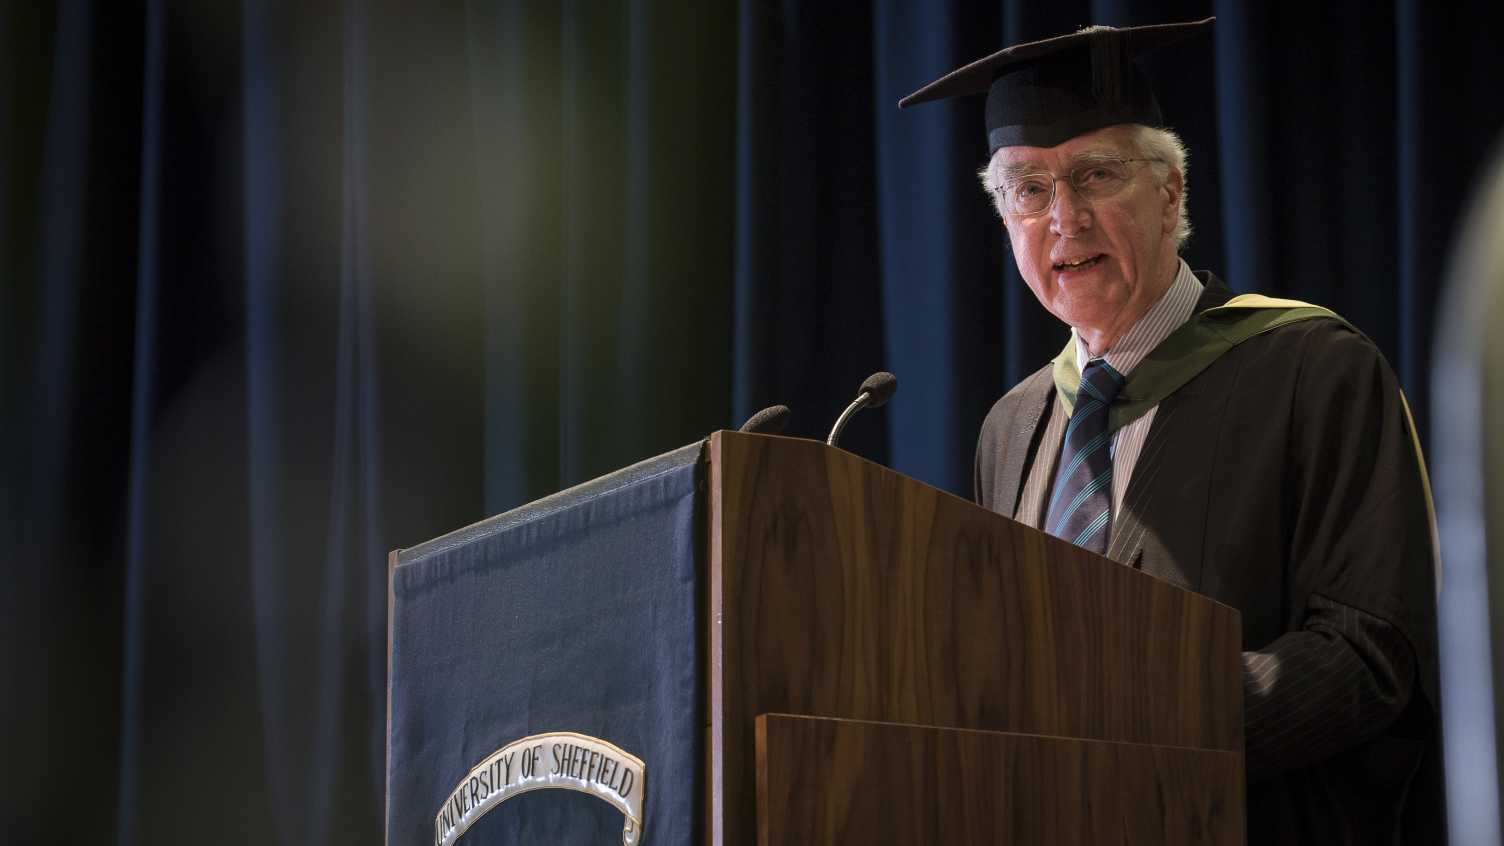 Thumbnail for Sheffield Law graduate receives Distinguished Alumni Award | Alumni